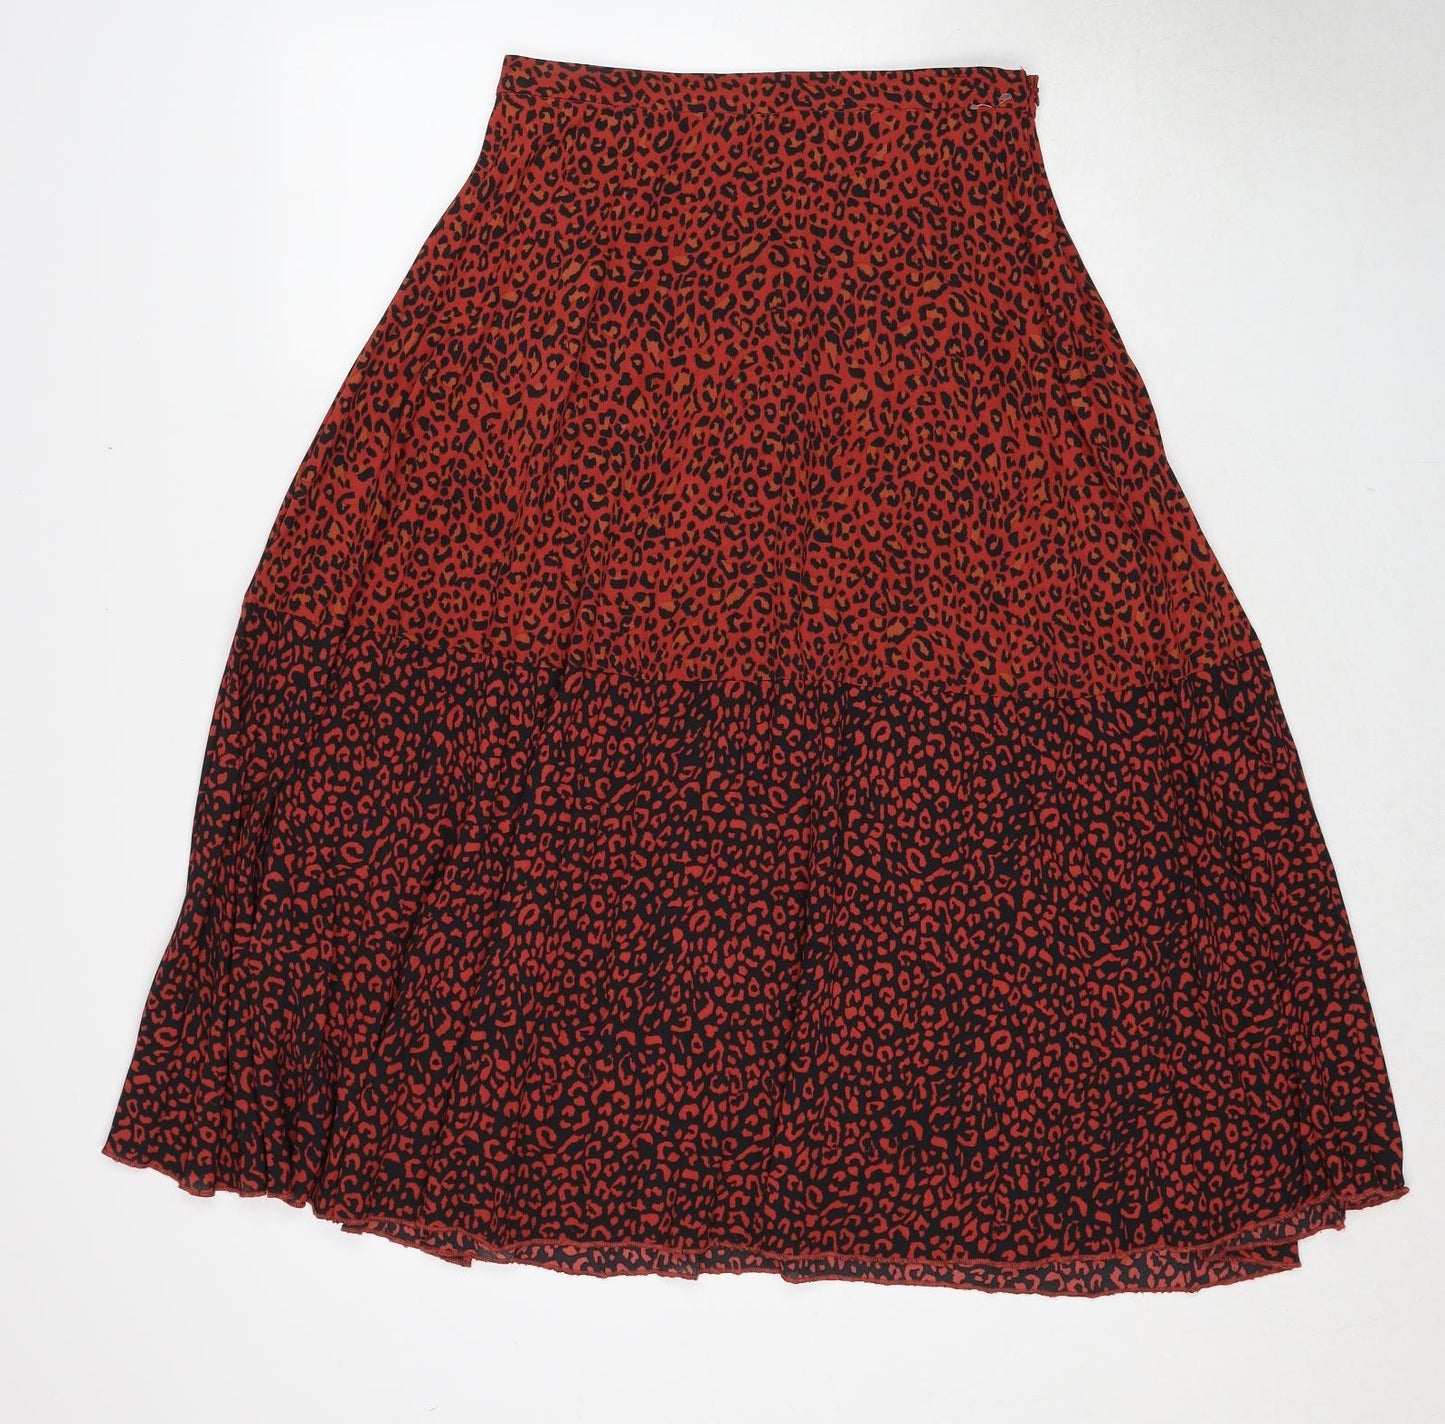 Stradivarius Womens Red Animal Print Polyester Swing Skirt Size S Zip - Leopard Pattern